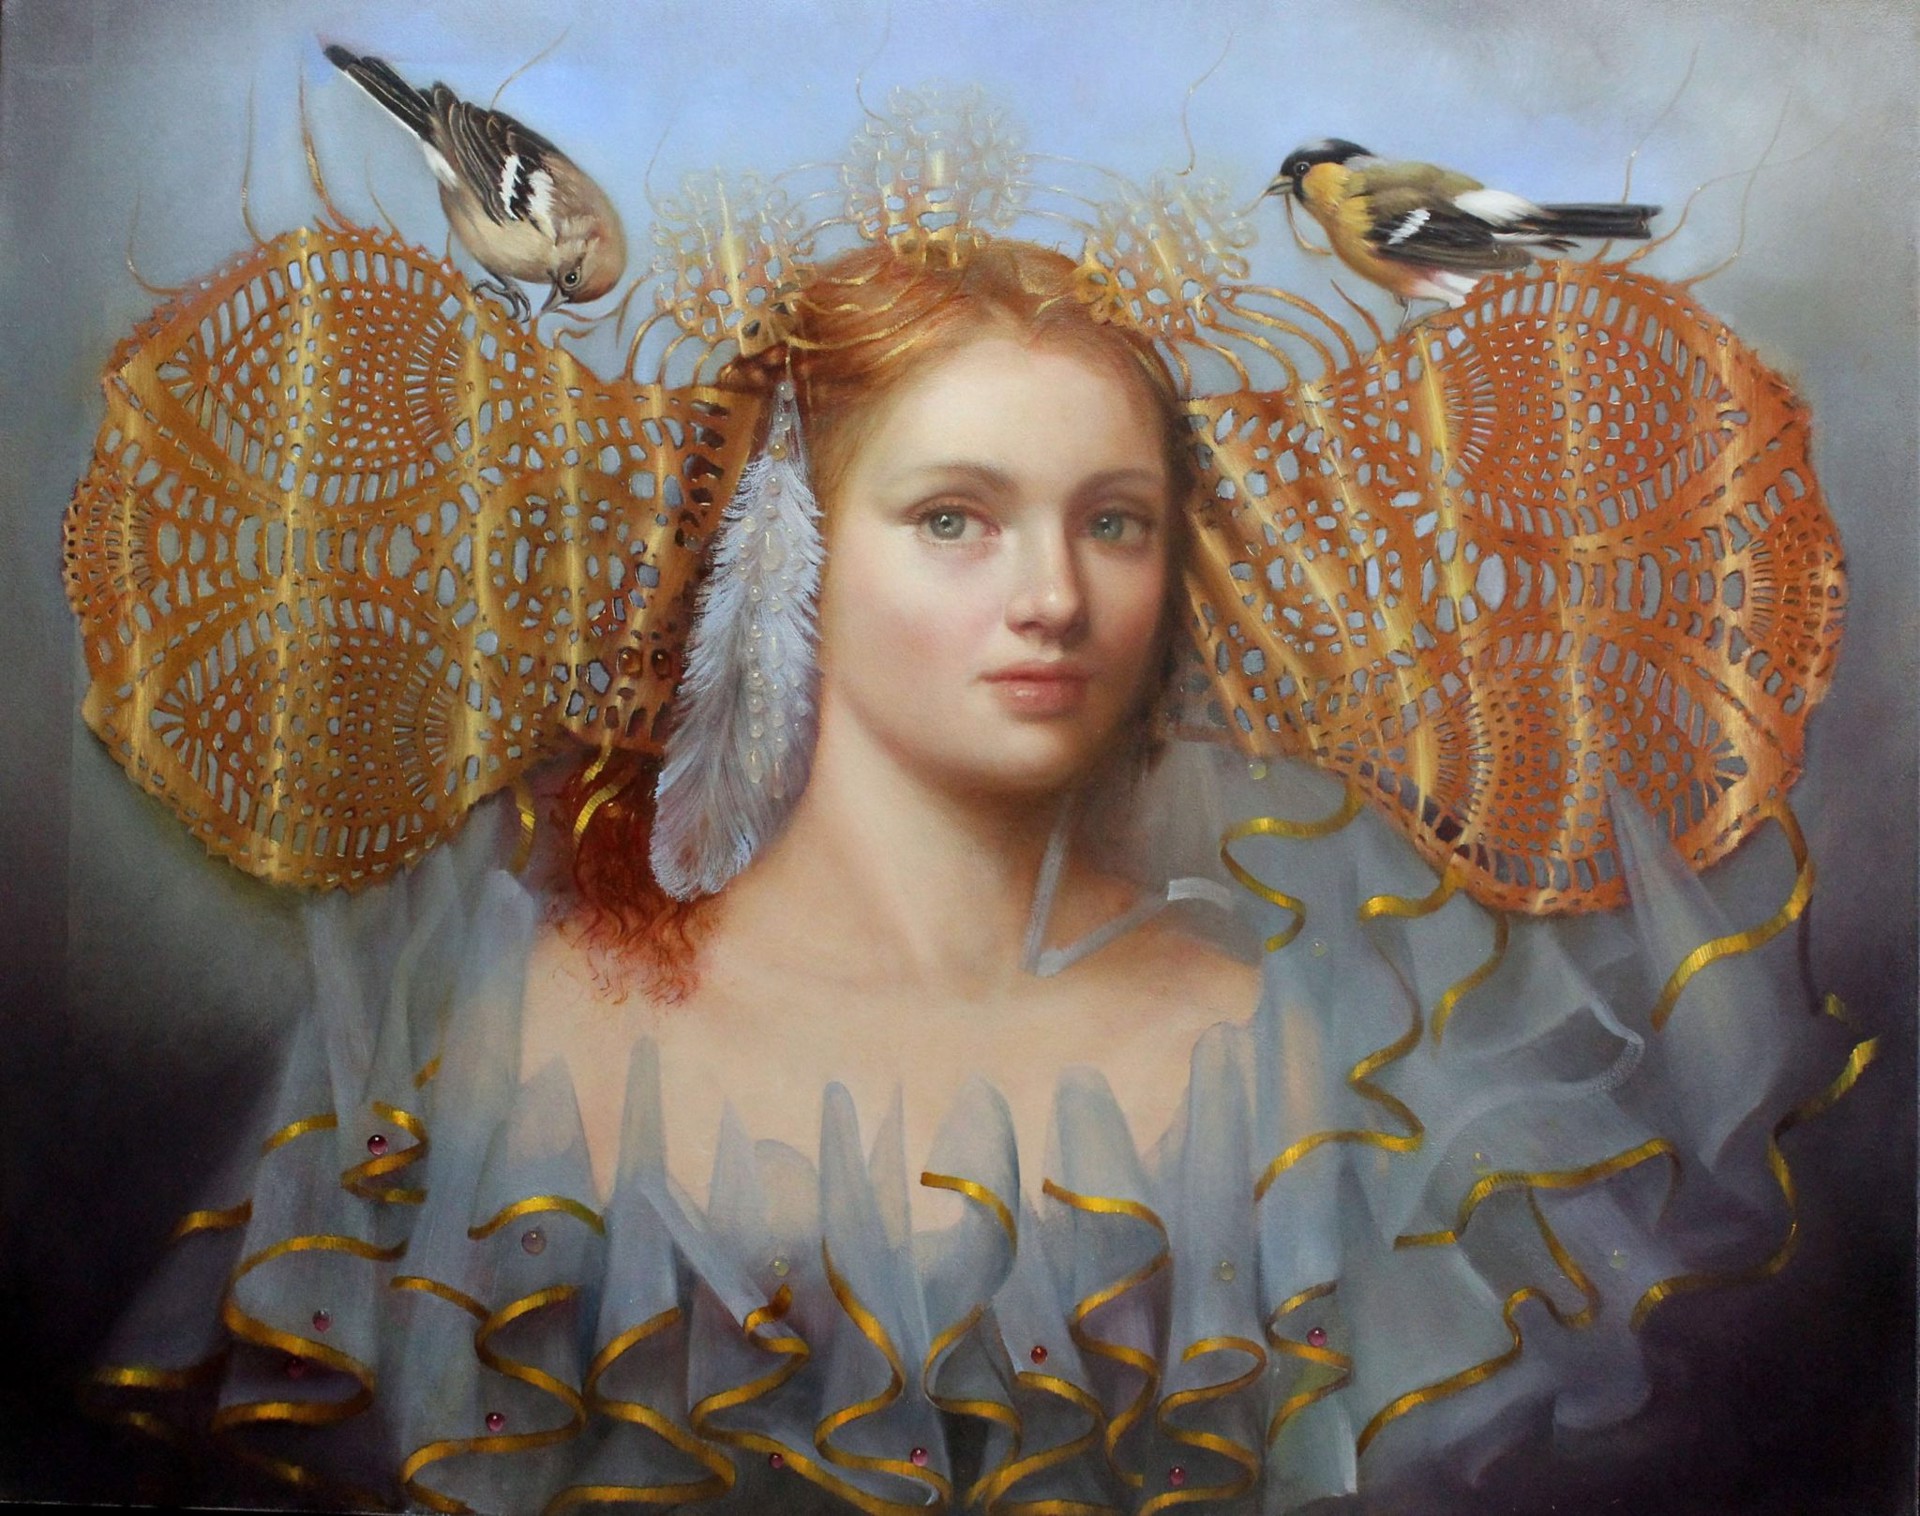 Birds of a Feather by Loretta Fasan